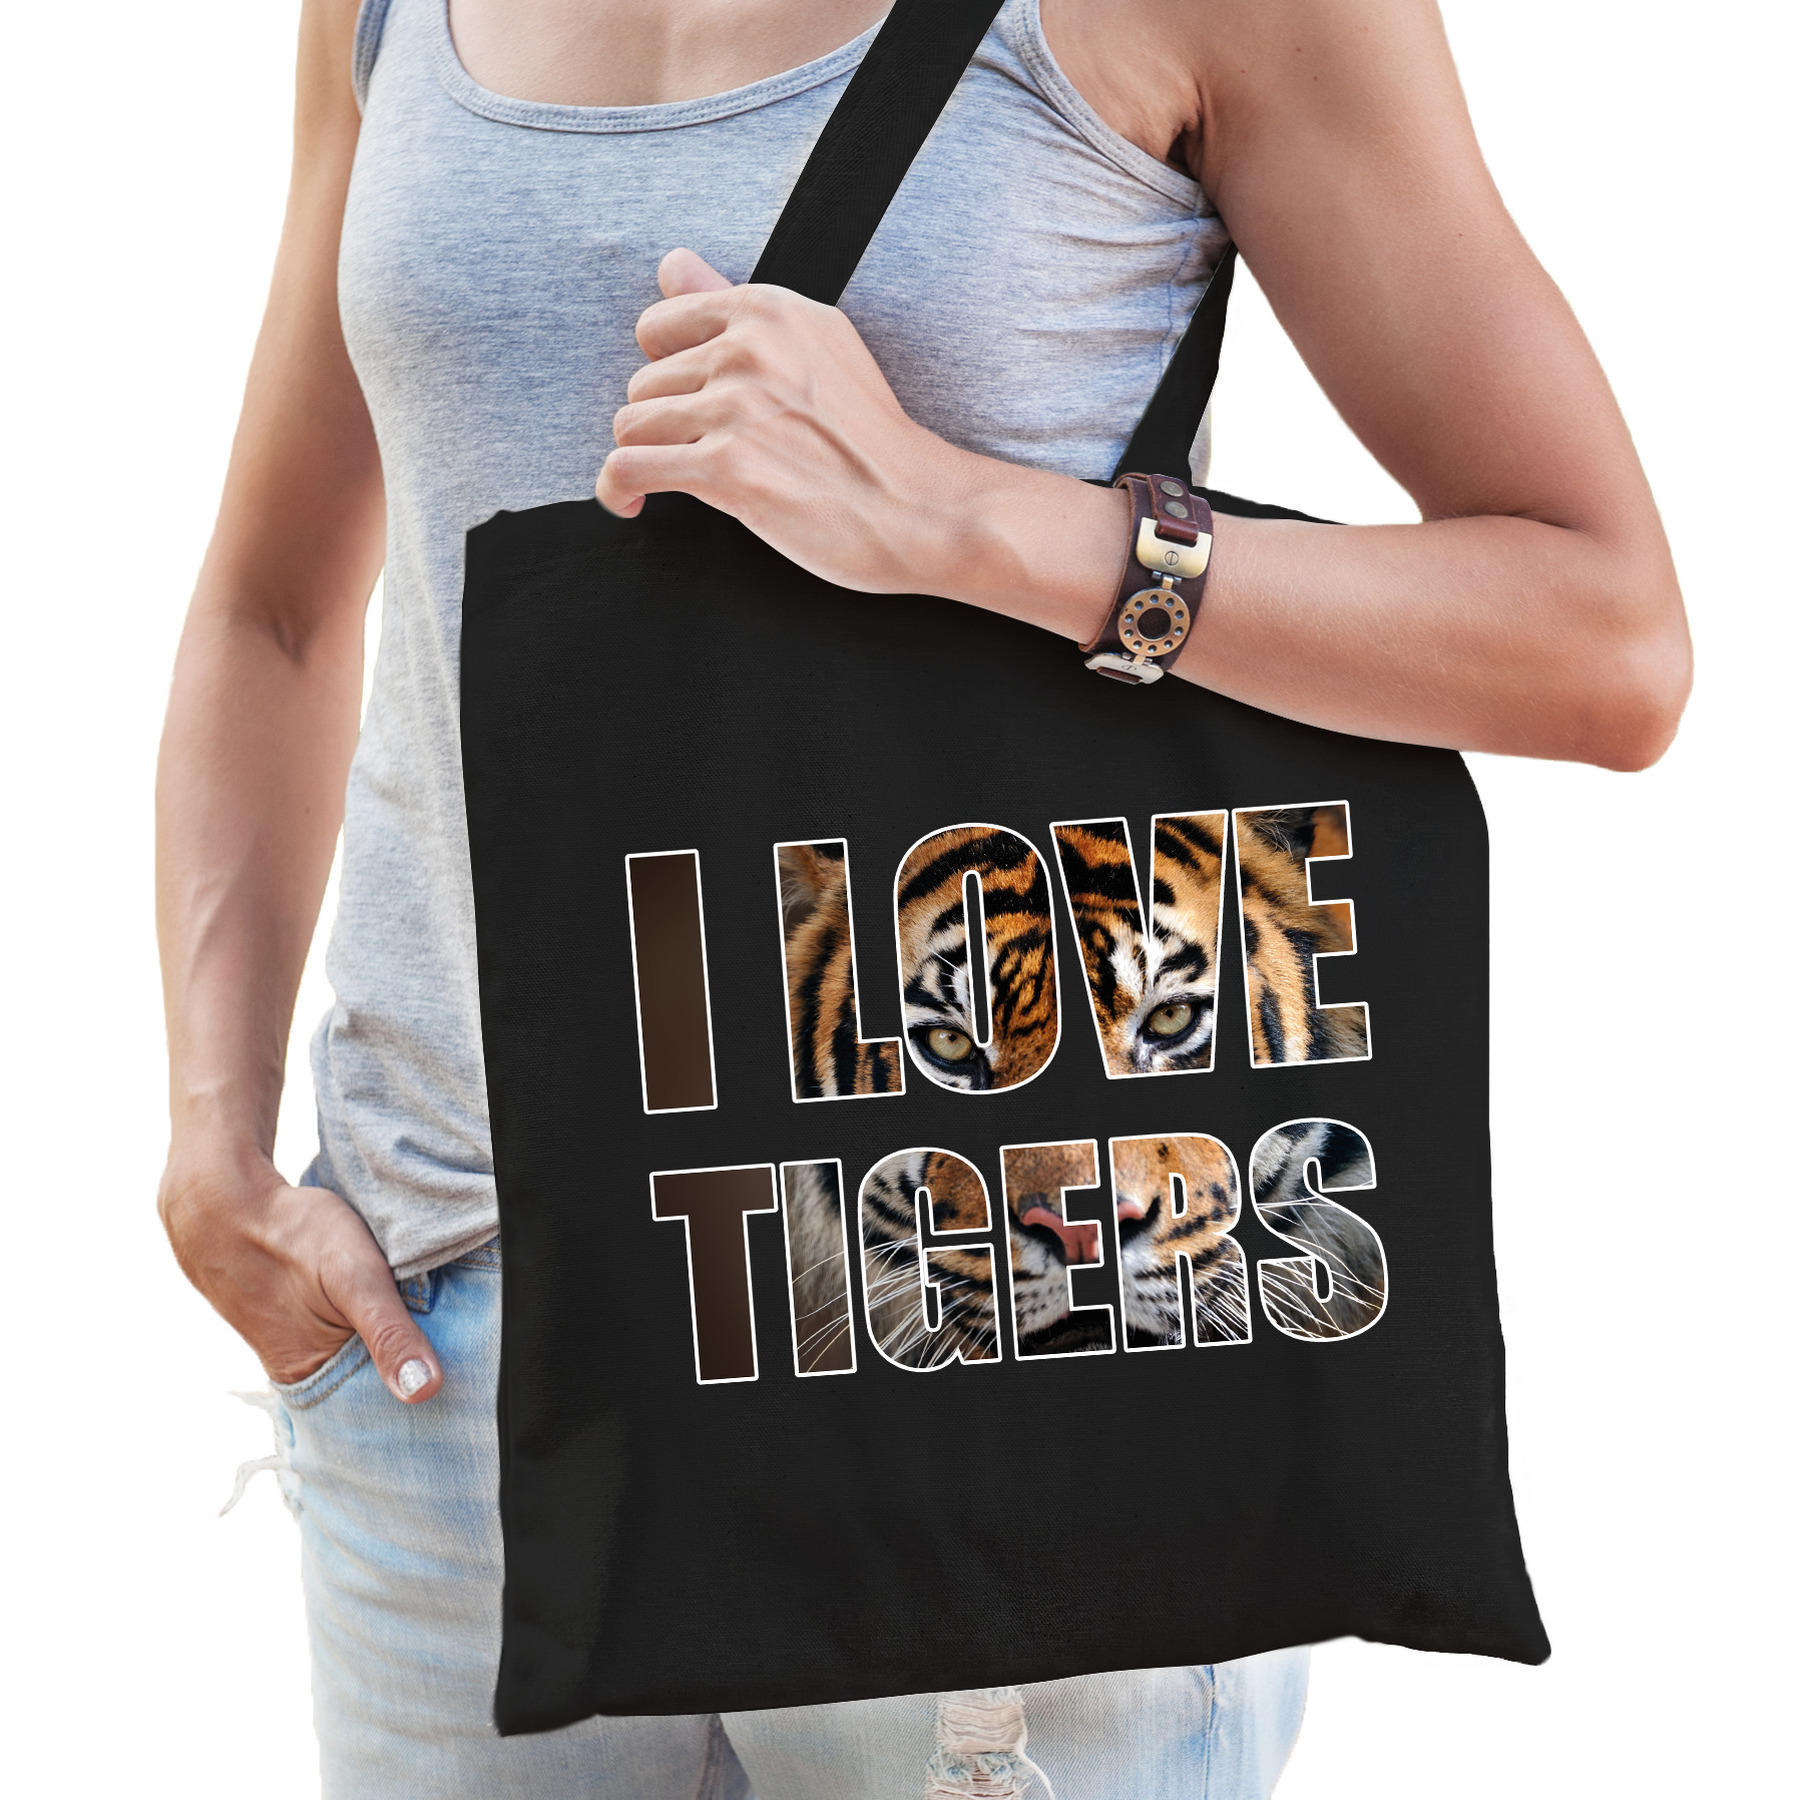 I love tigers / tijgers kantoenen tasje zwart dames